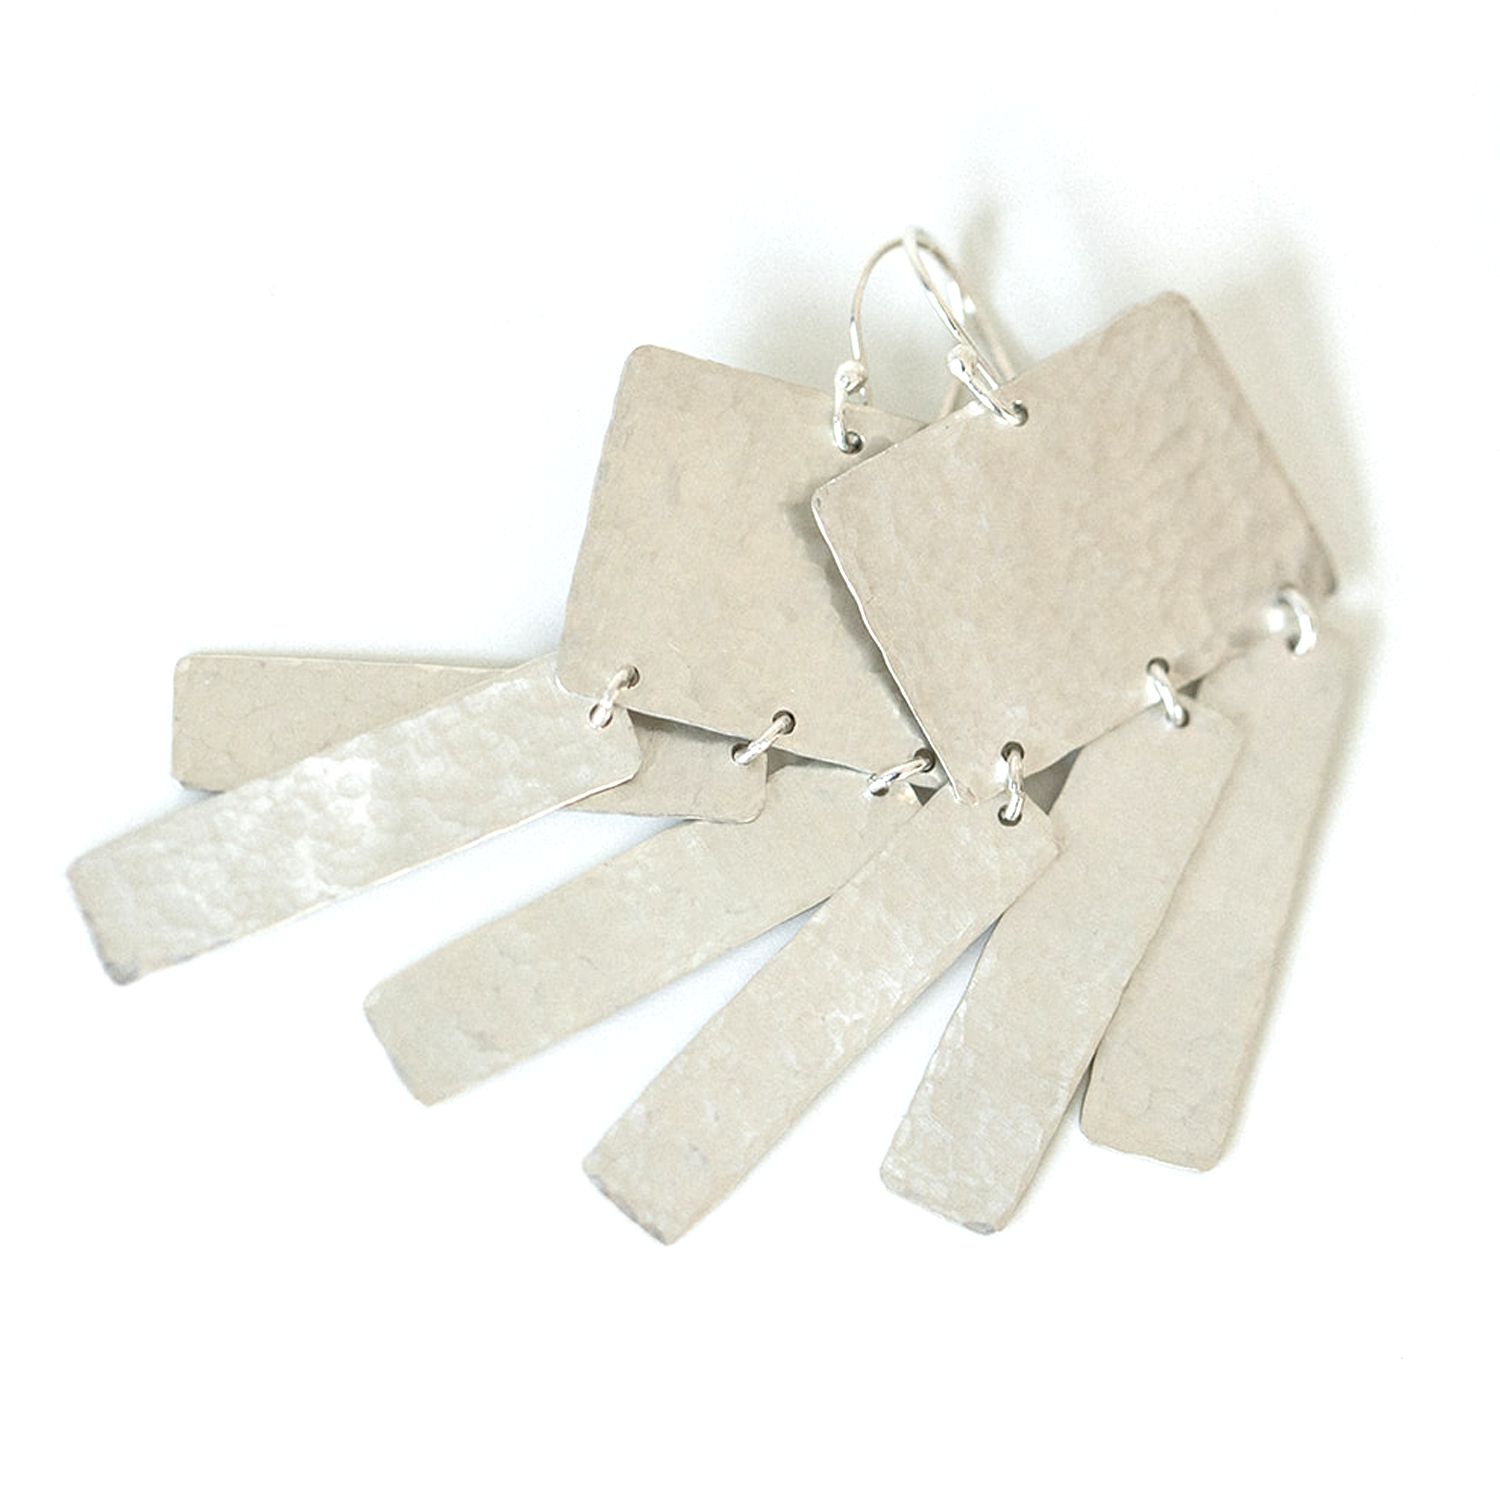 Enarmoured: Light Dancer Earrings Silver Product Image 1 of 1